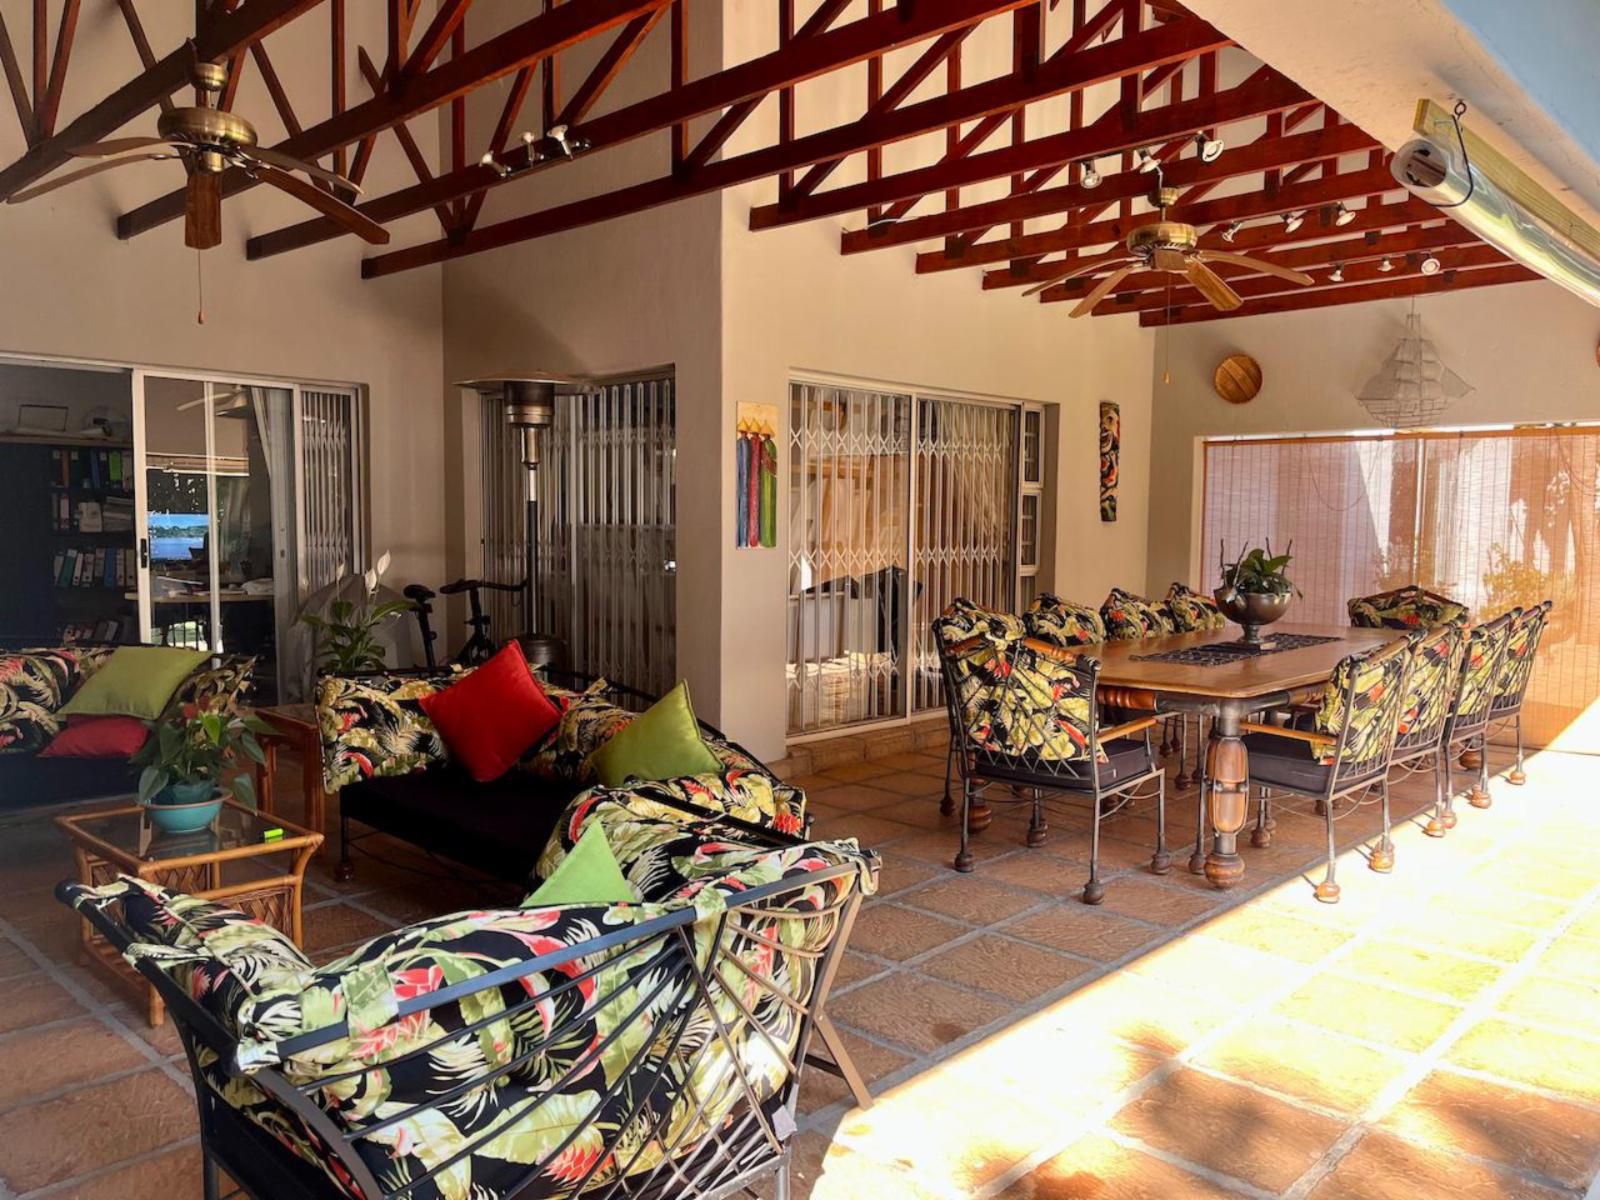 Lenox Lodge Guesthouse Sharonlea Johannesburg Gauteng South Africa Living Room